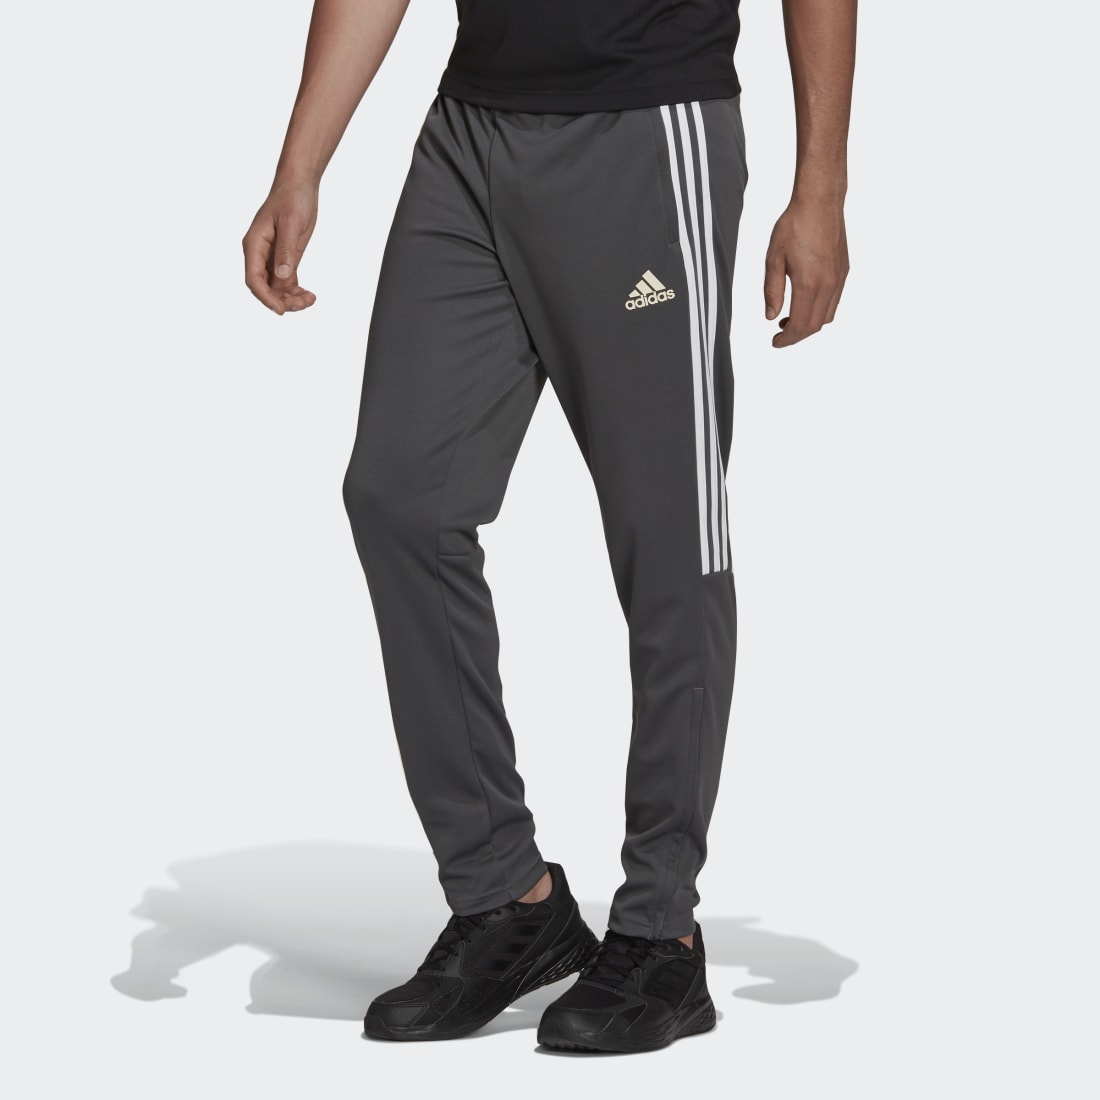 Mens Adidas Originals Nyc Slim Taper Cuffed Pants BK7261